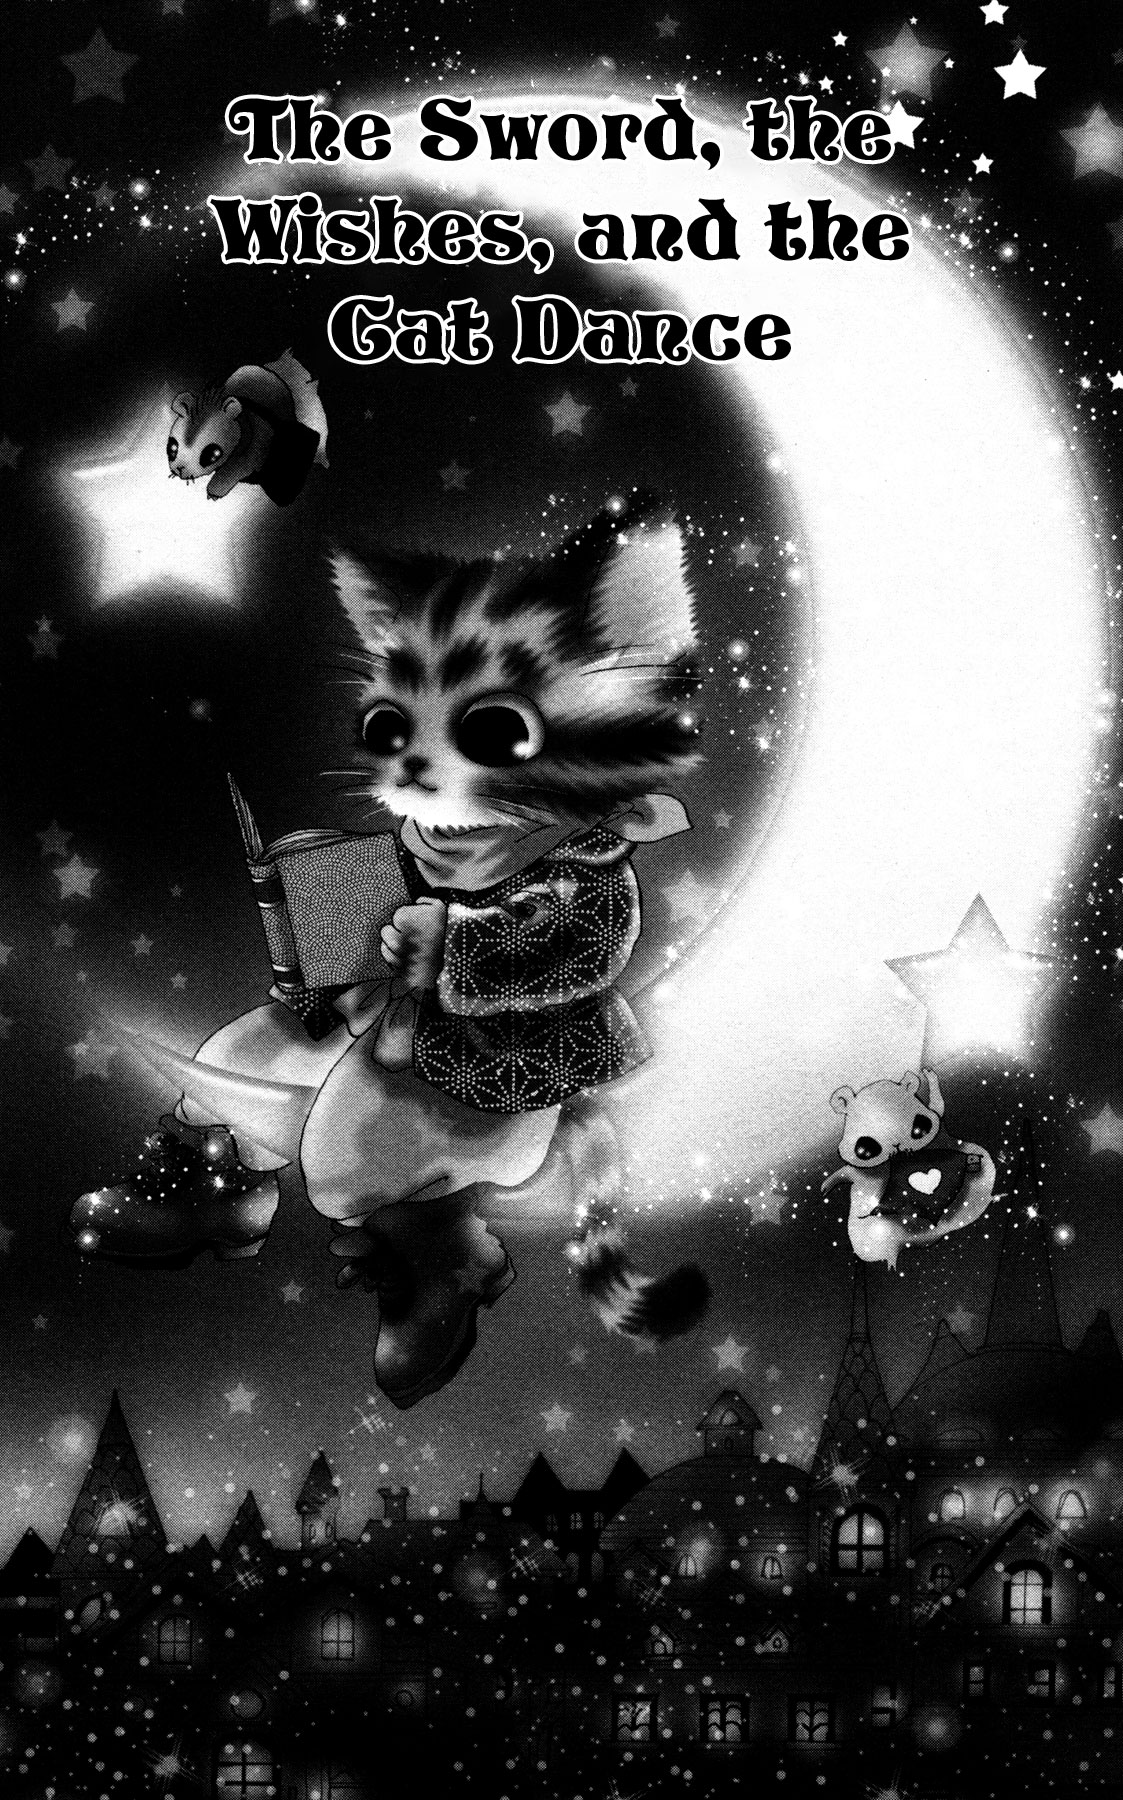 Neko Mix Genkitan Toraji Vol. 6 Ch. 20 The Sword, the Wishes, and the Cat Dance